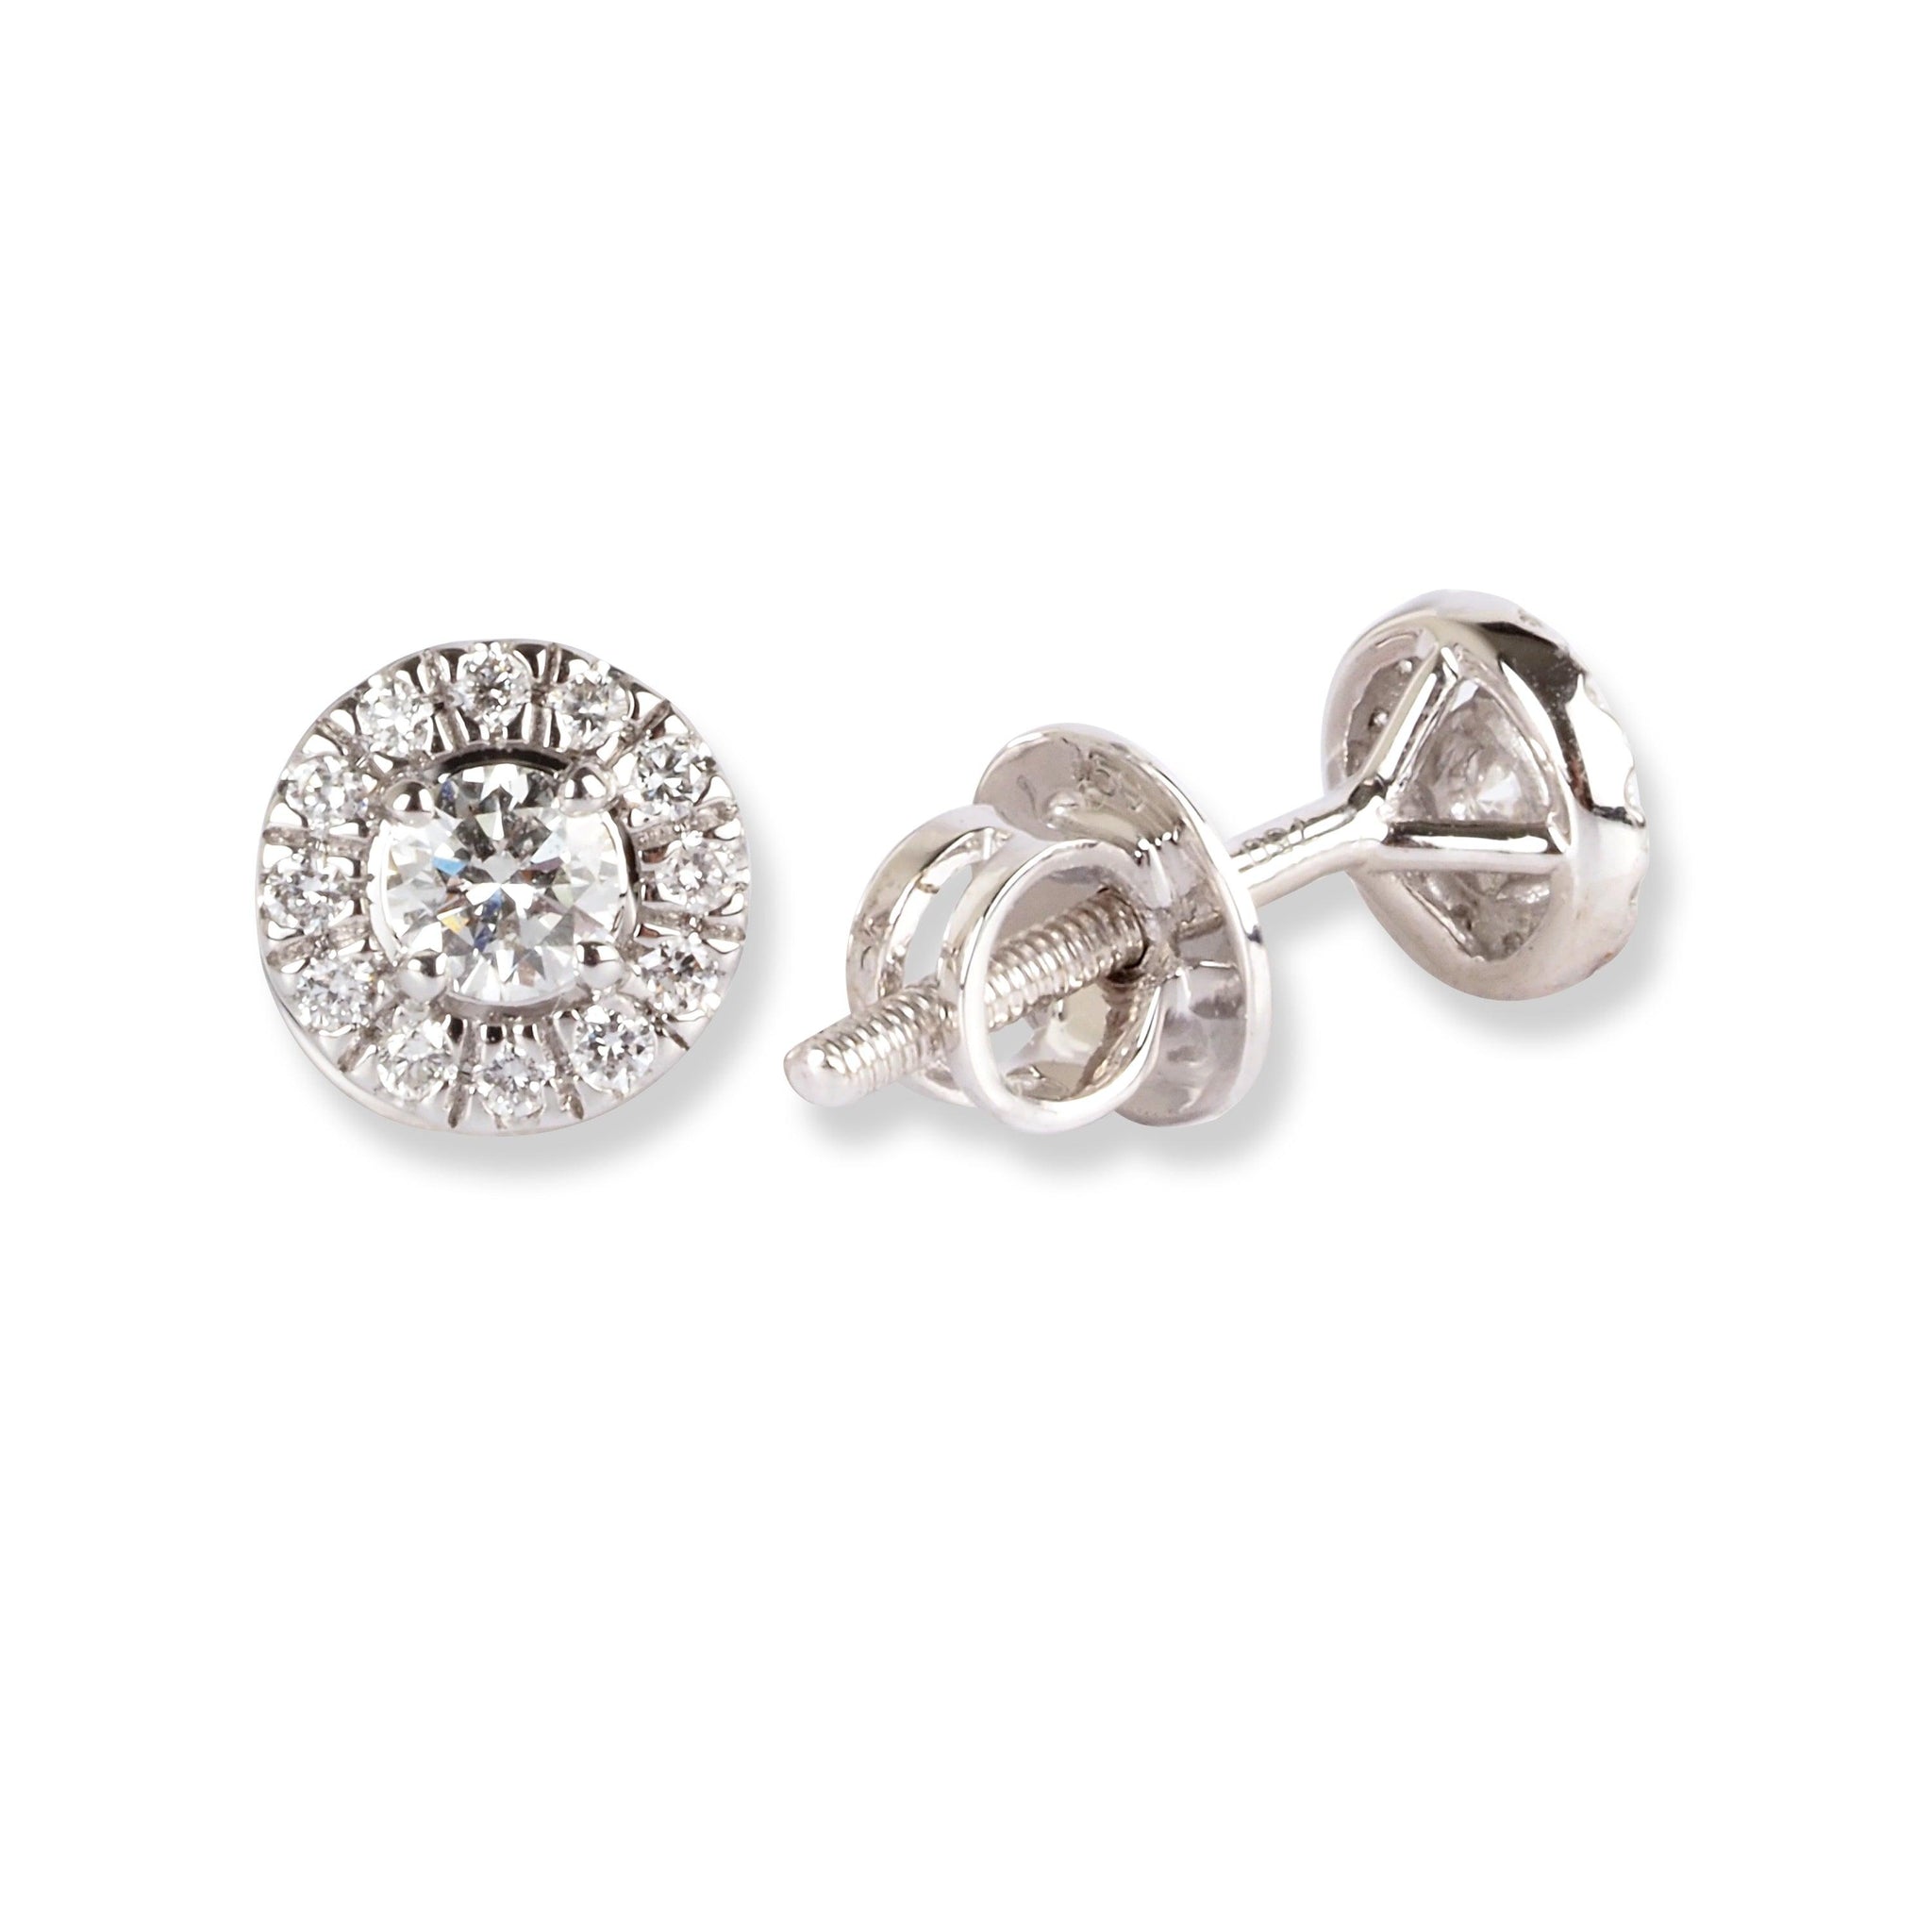 18ct White Gold Diamond Earrings E-7944